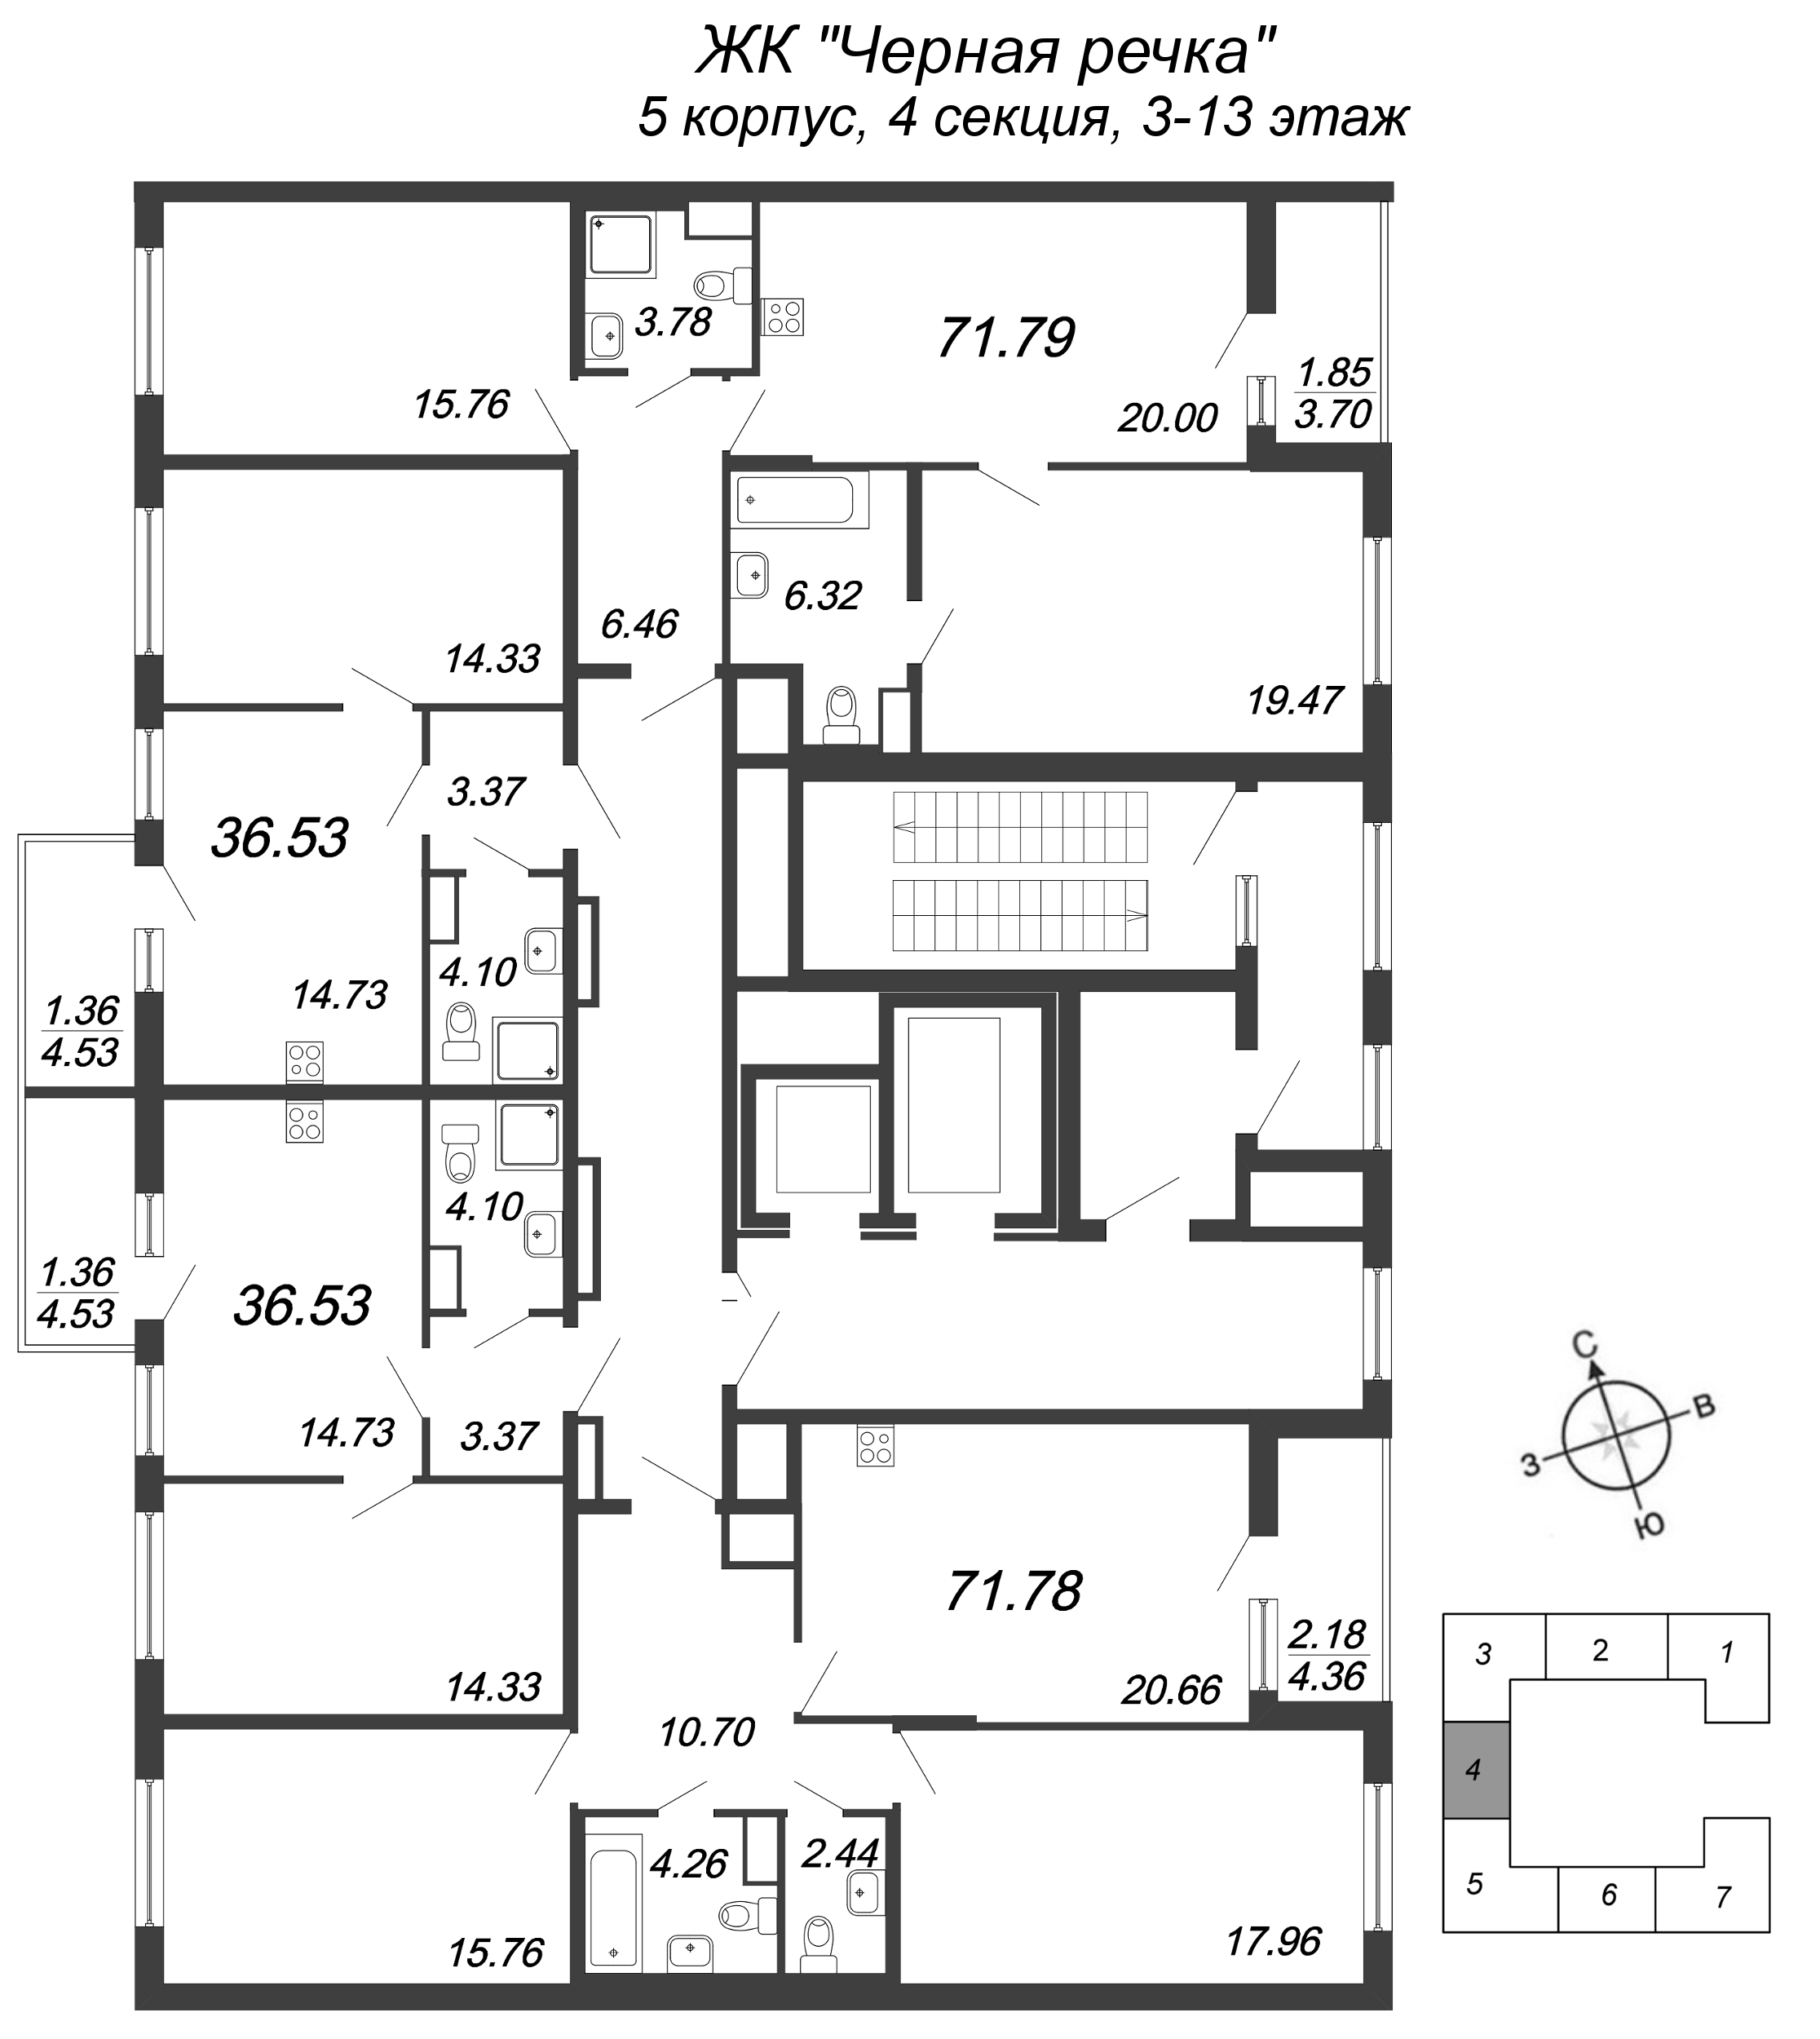 3-комнатная (Евро) квартира, 71.79 м² в ЖК "Чёрная речка от Ильича" - планировка этажа